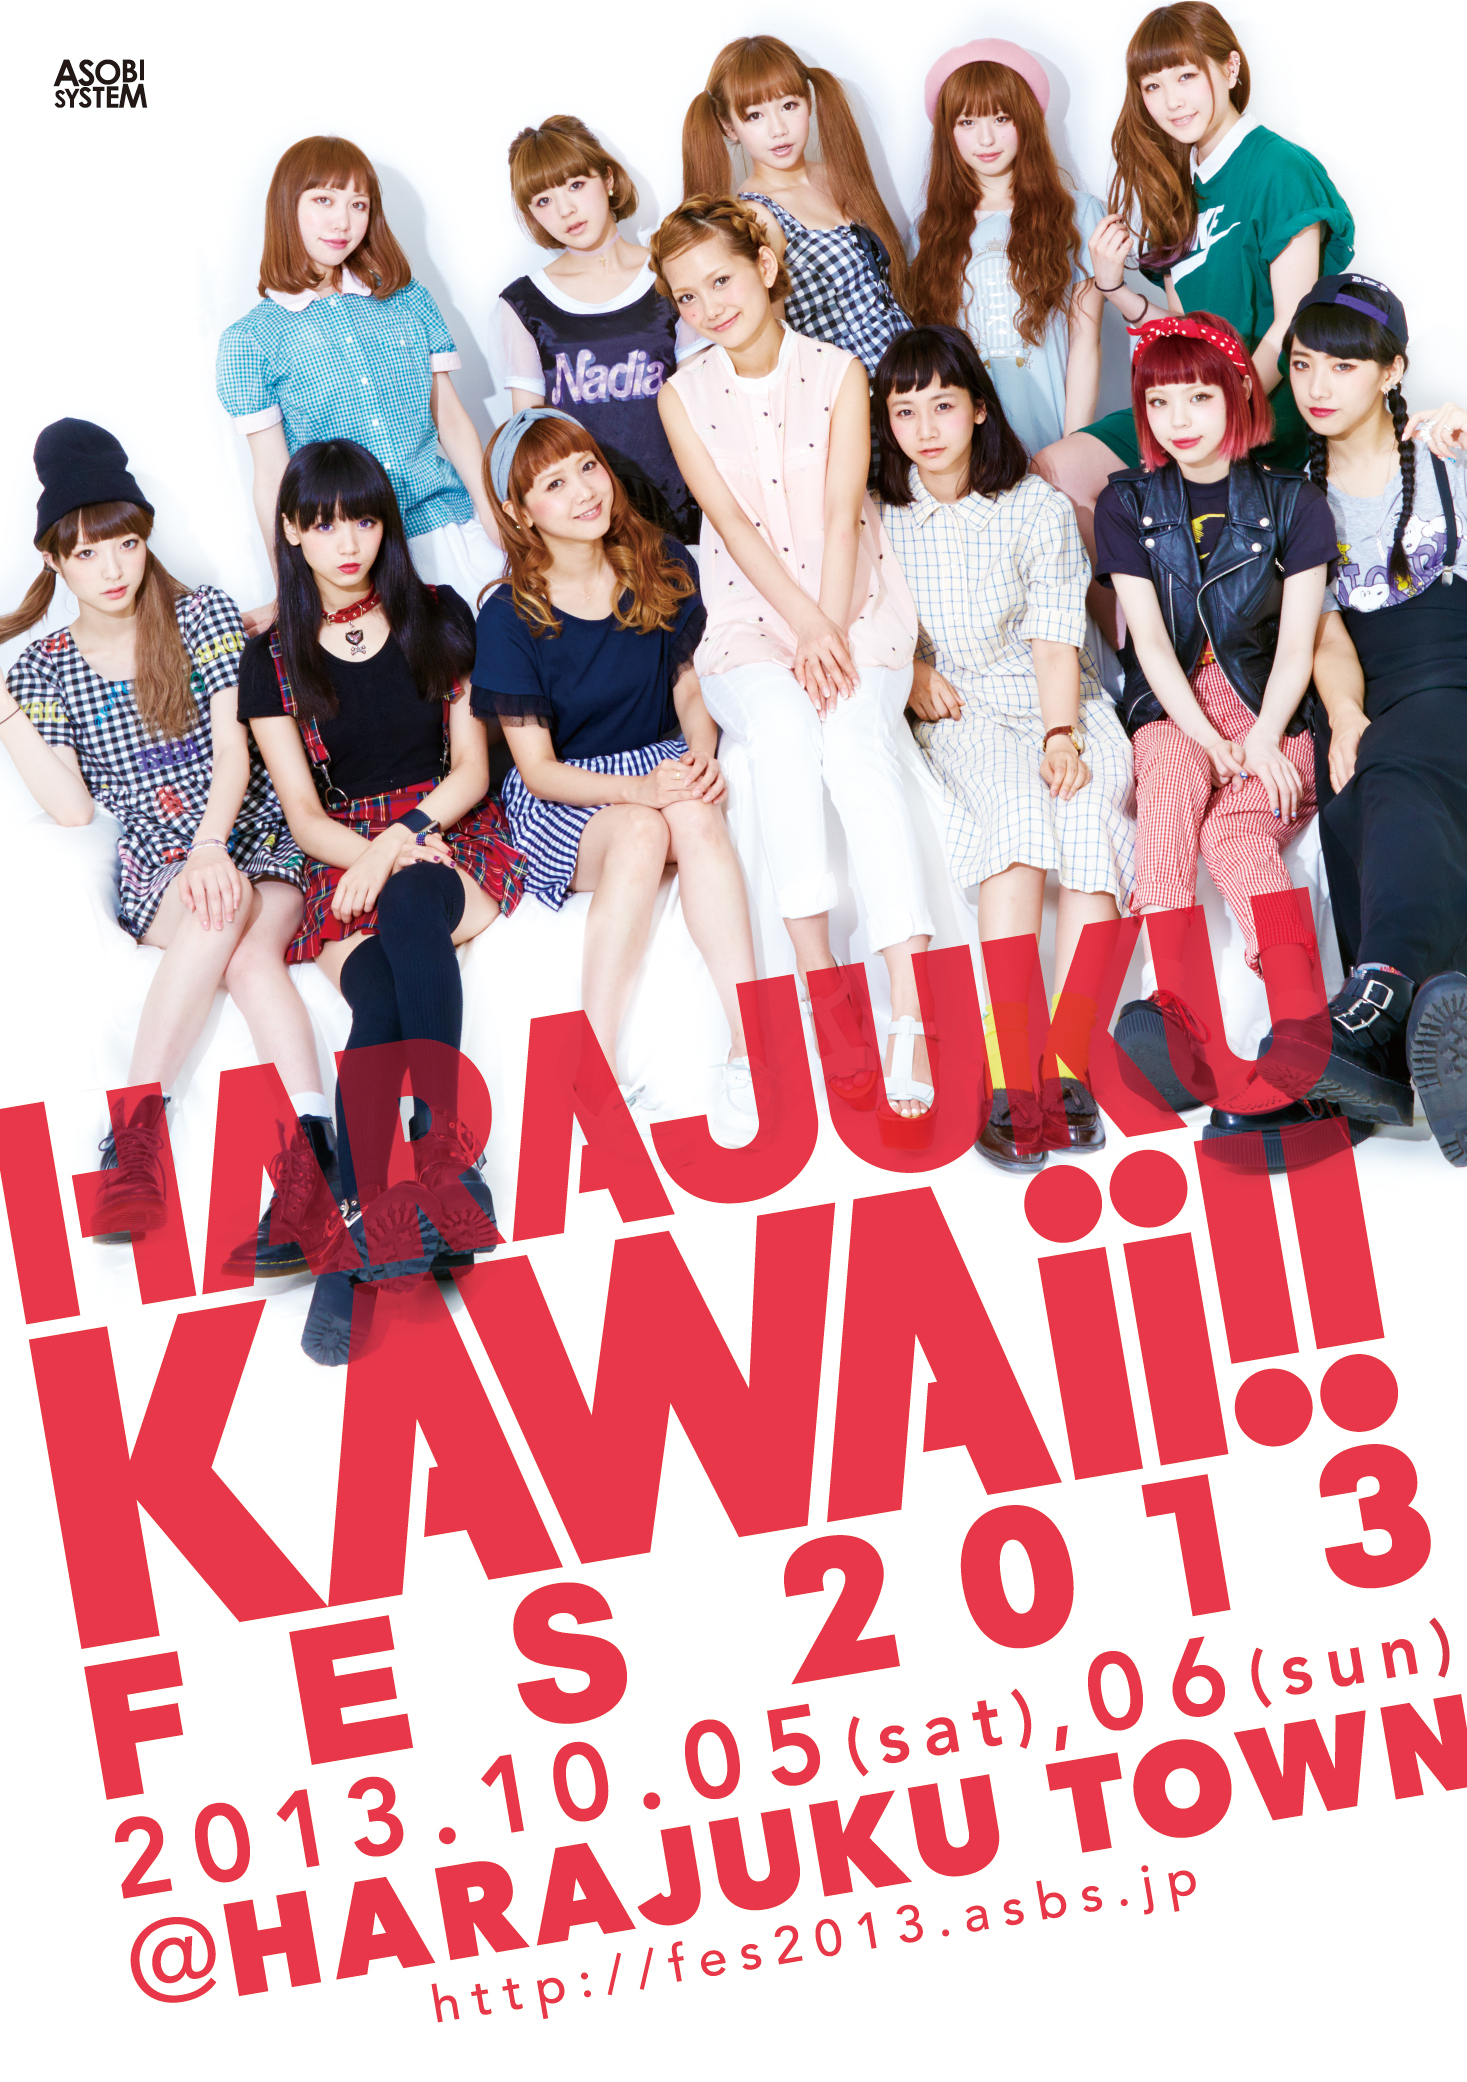 “HARAJUKU KAWAii!! FES 2013” to be held over 2 days in Harajuku in October!!